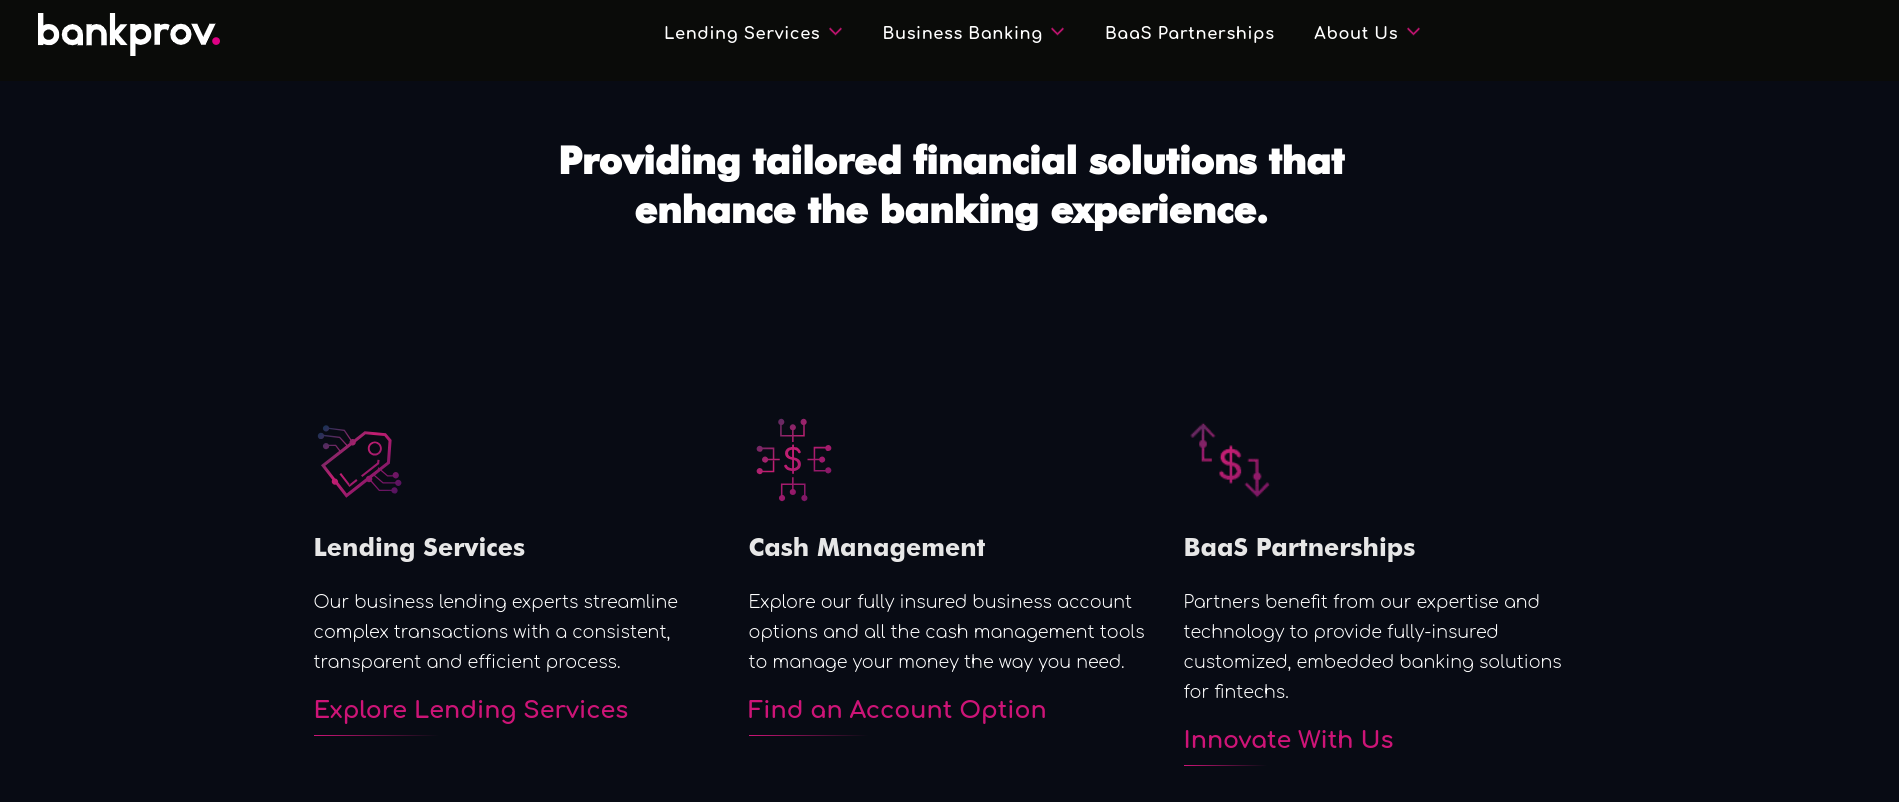 bankprov homepage